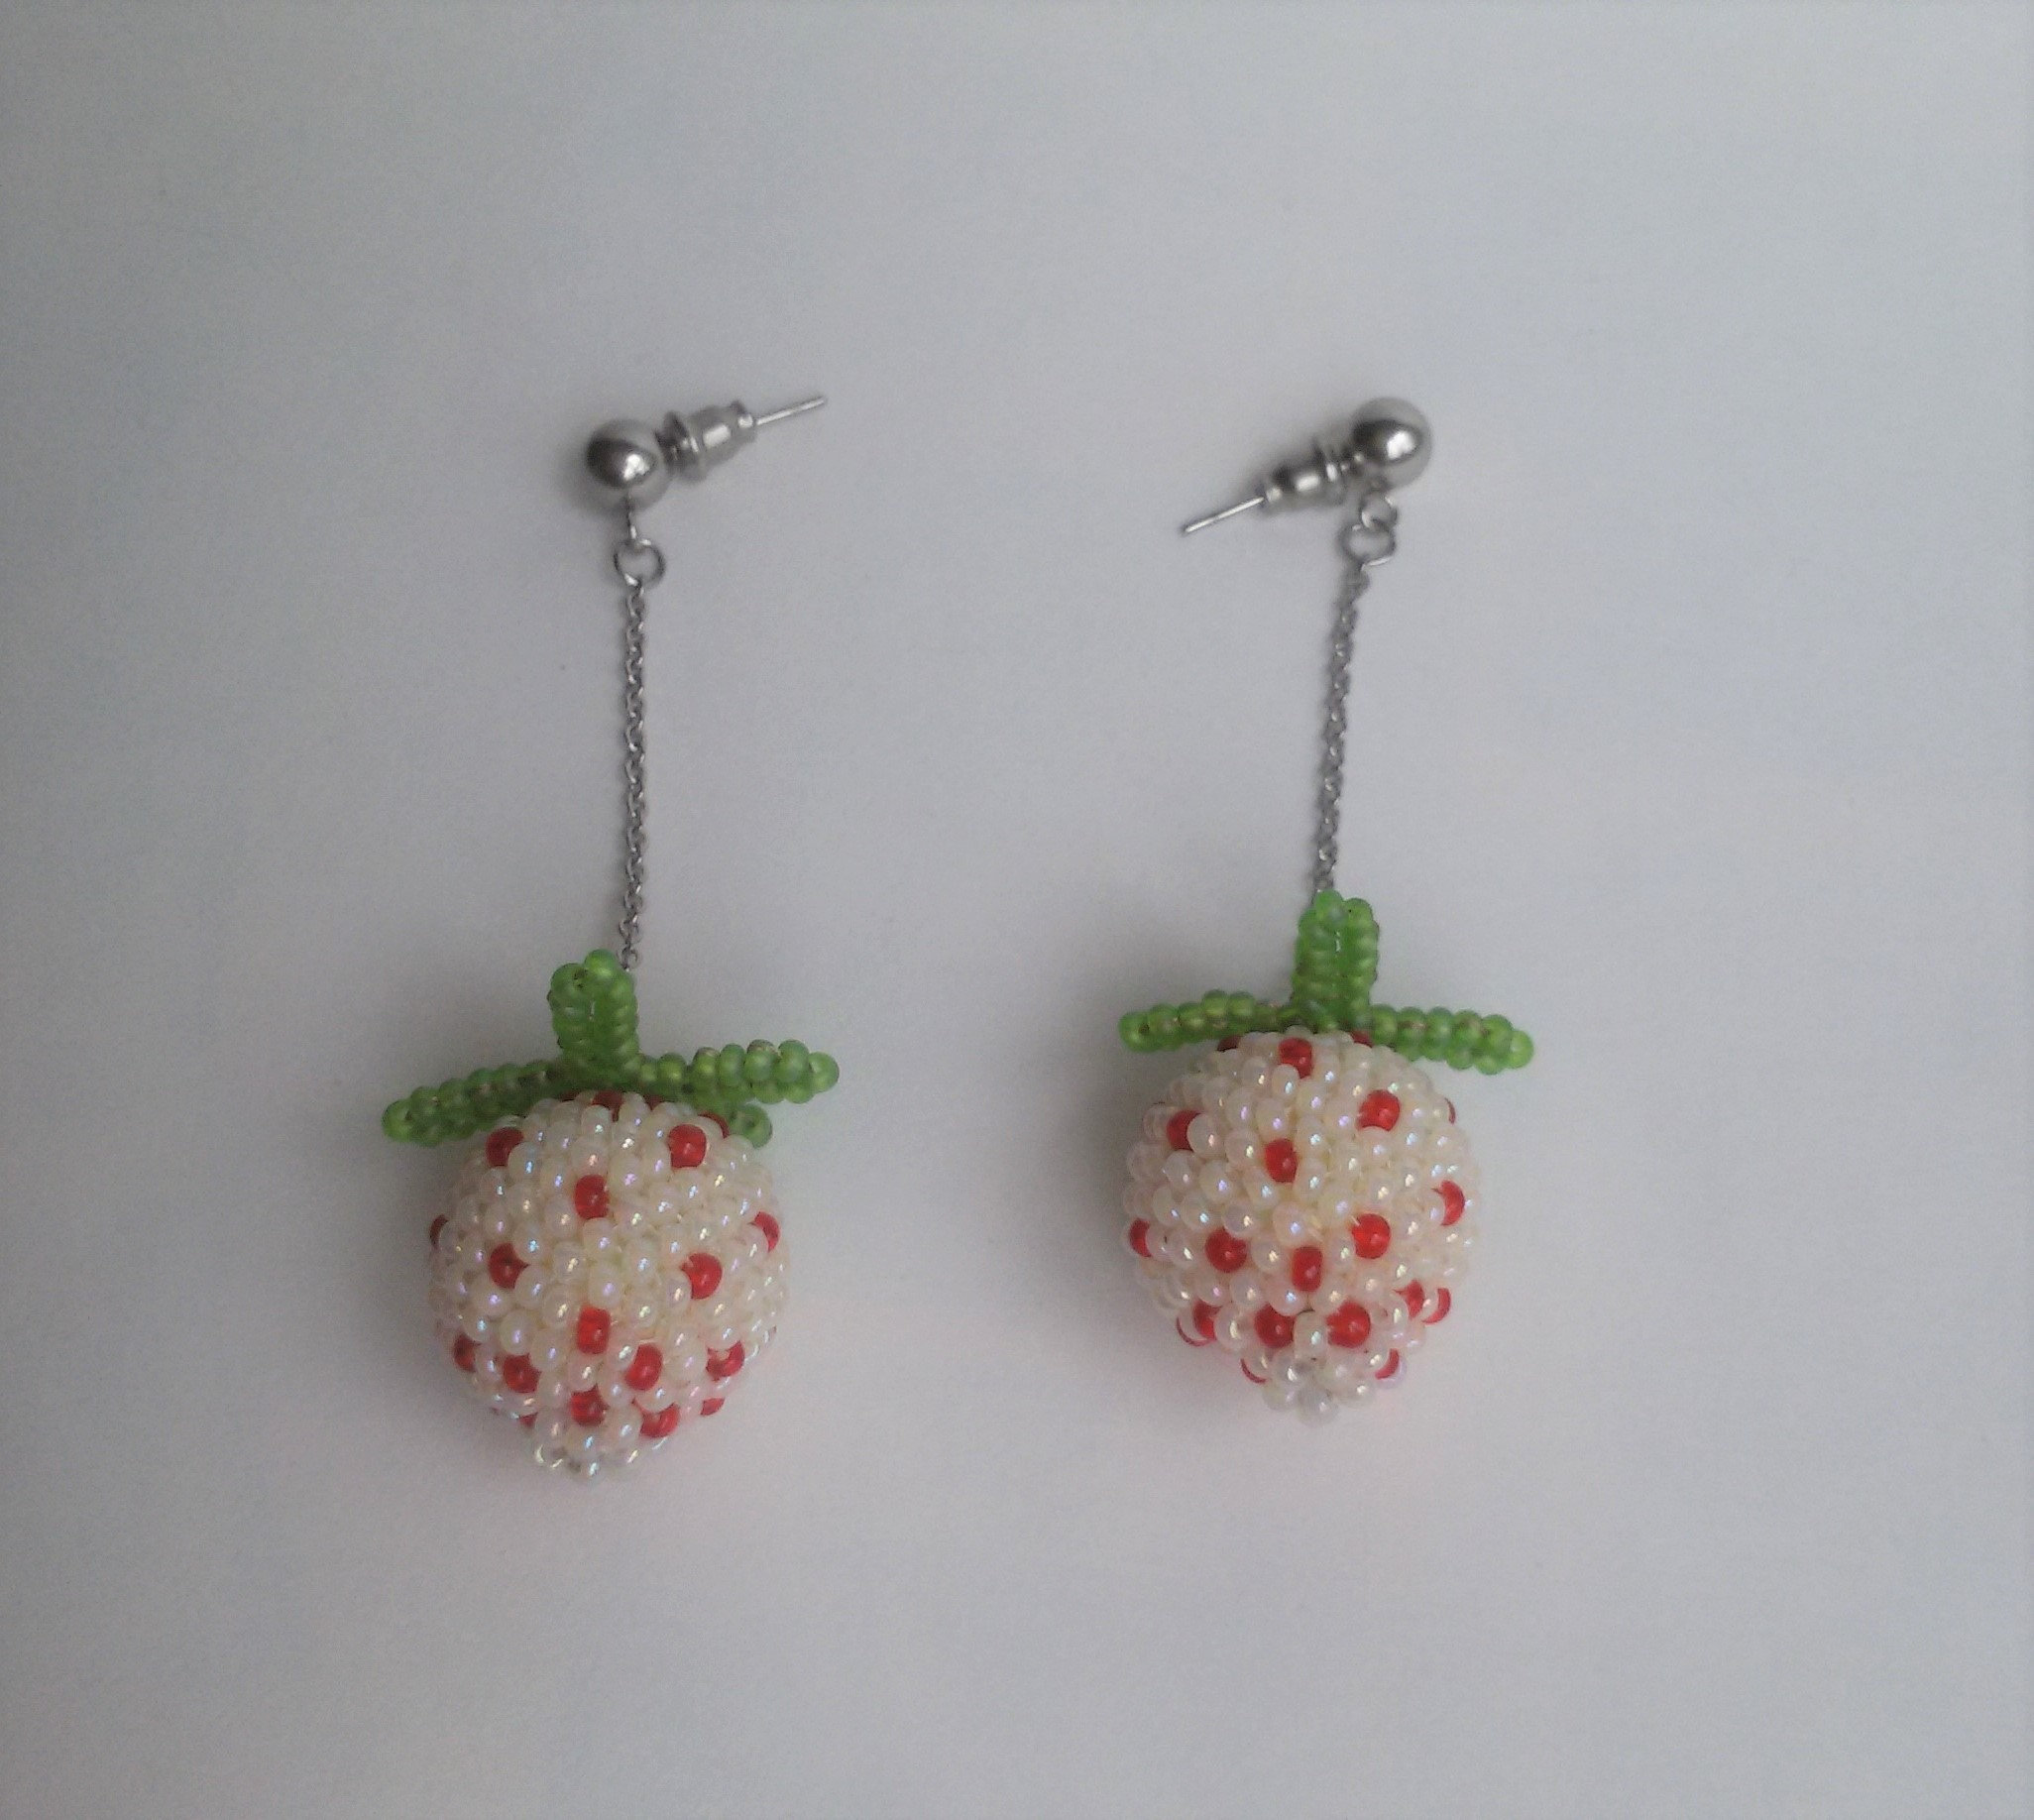 cottagecore accessories Lemon earrings UK/ cottagecore jewellery uk fruit gift handmade earrings uk beaded earrings/ fruit jewellery